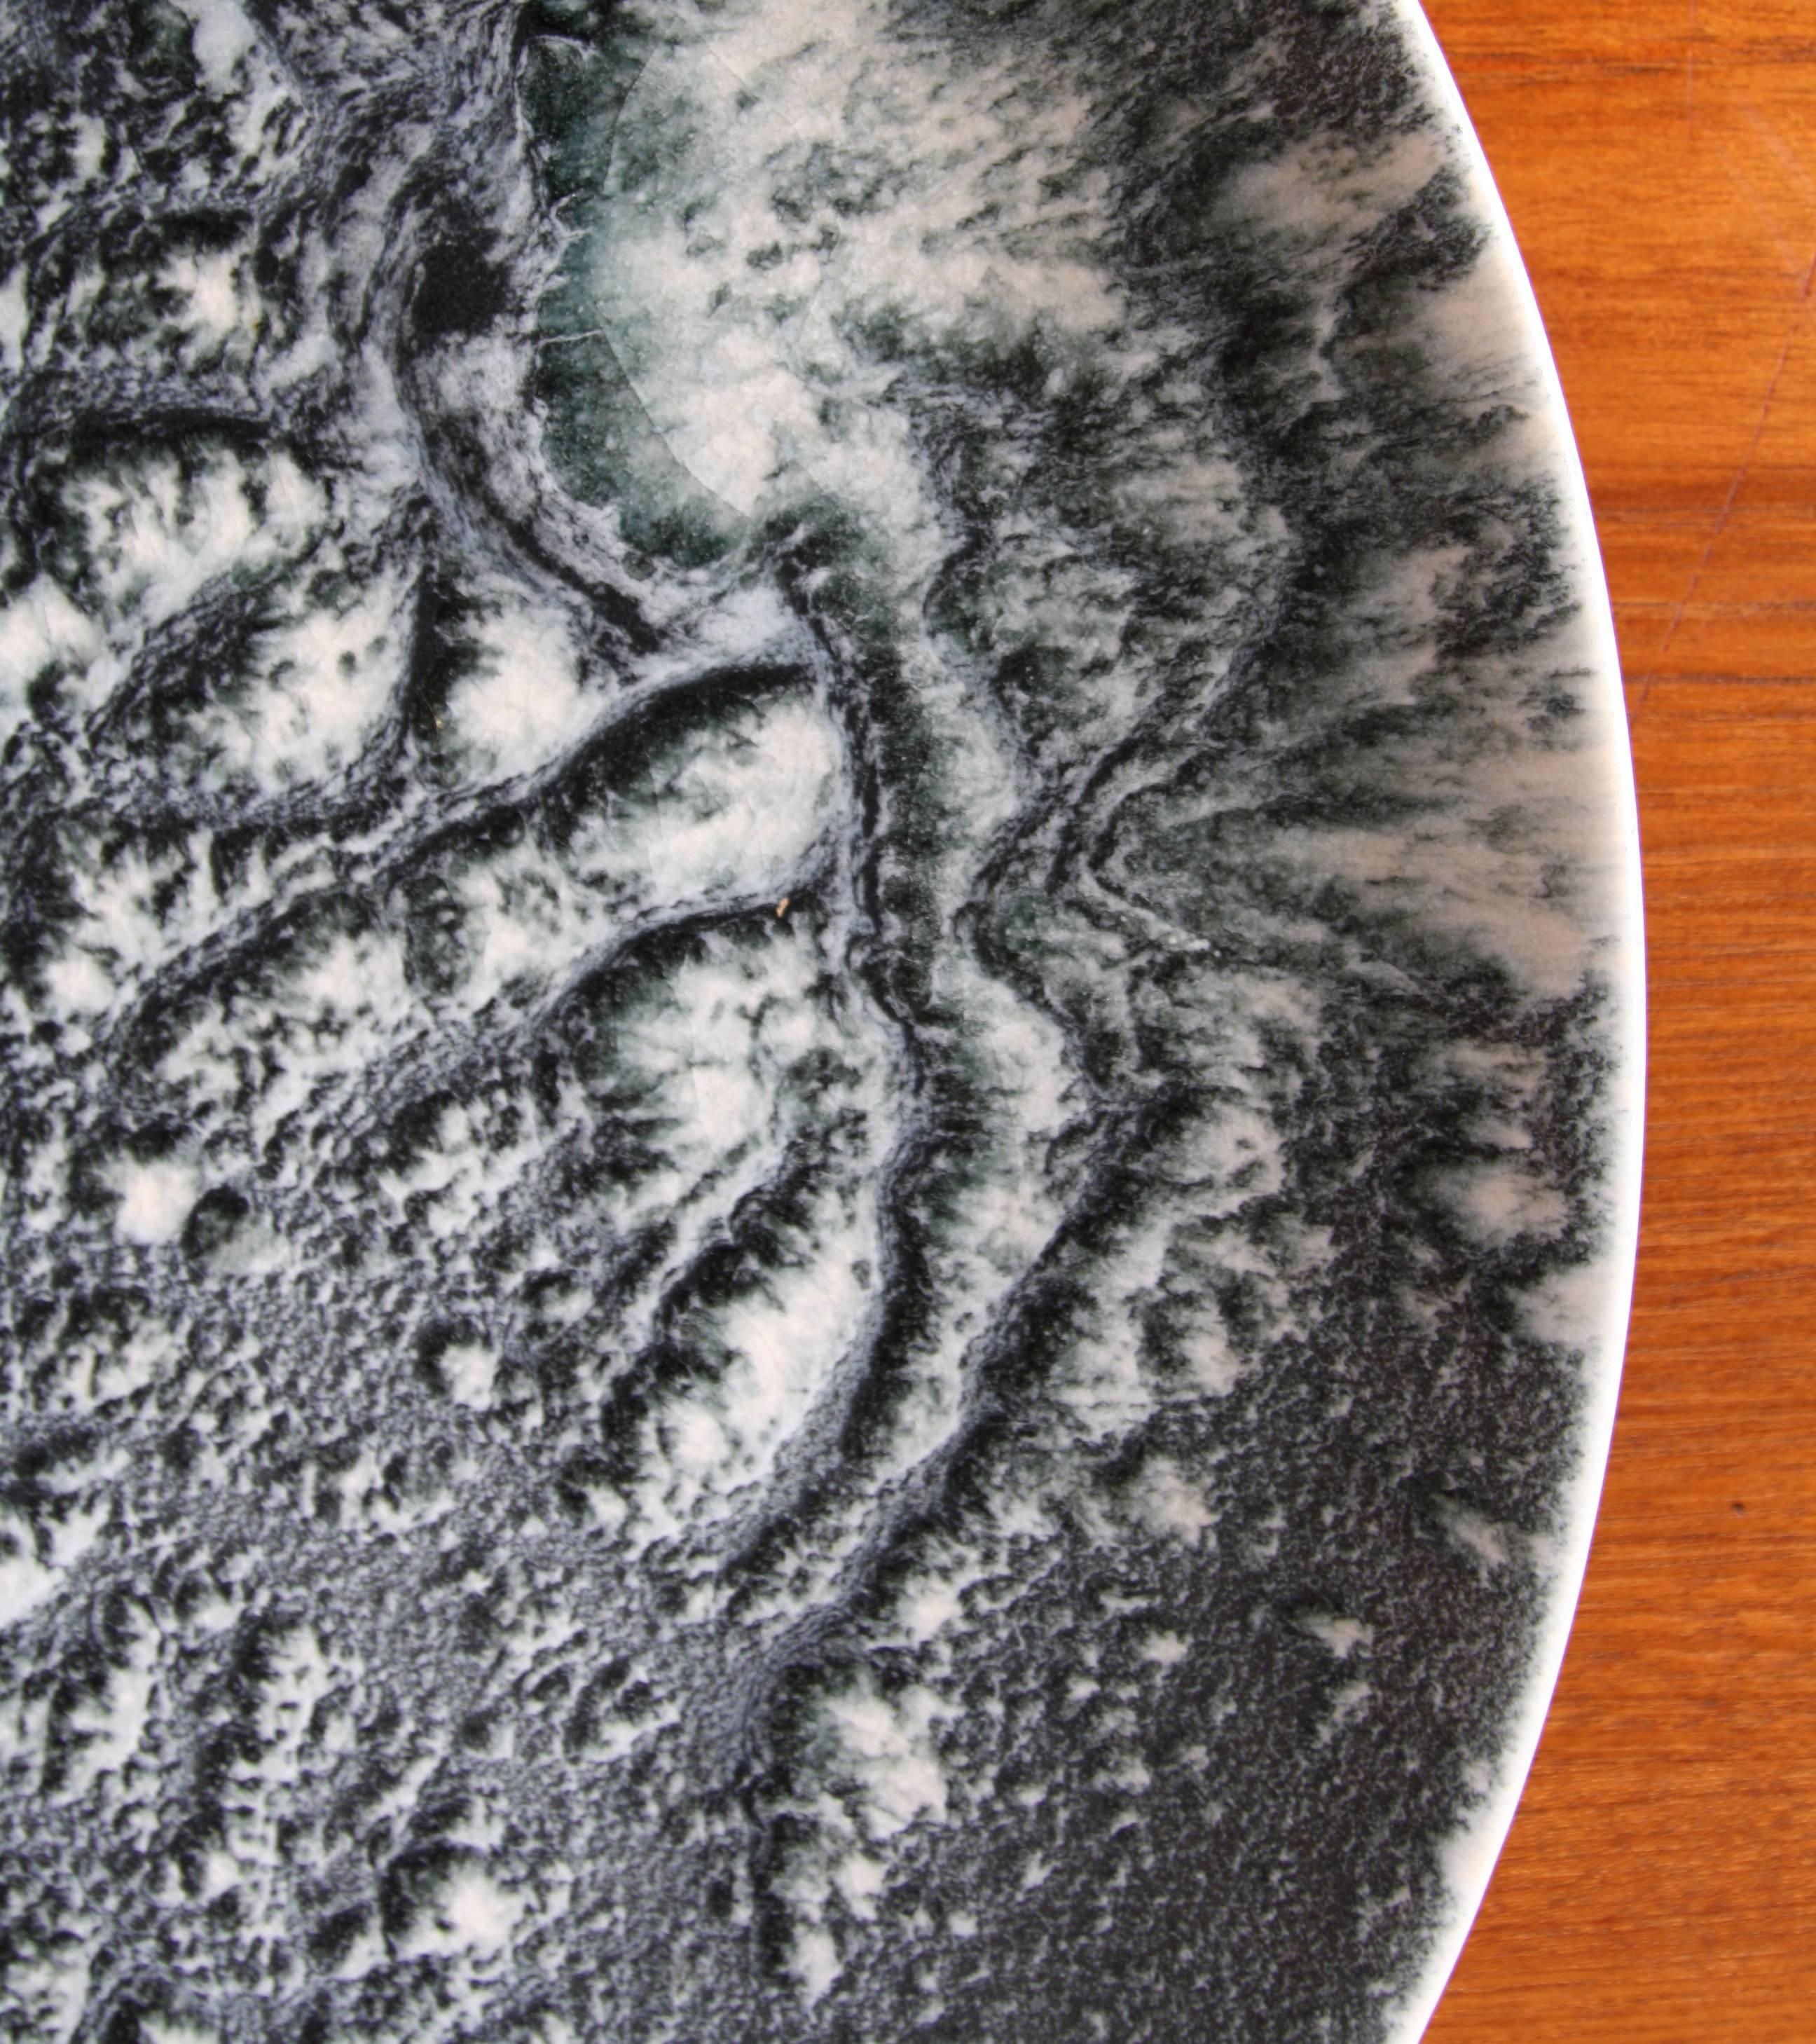 Hand-Crafted Kasper Würtz One off Cosmic Stoneware Platter